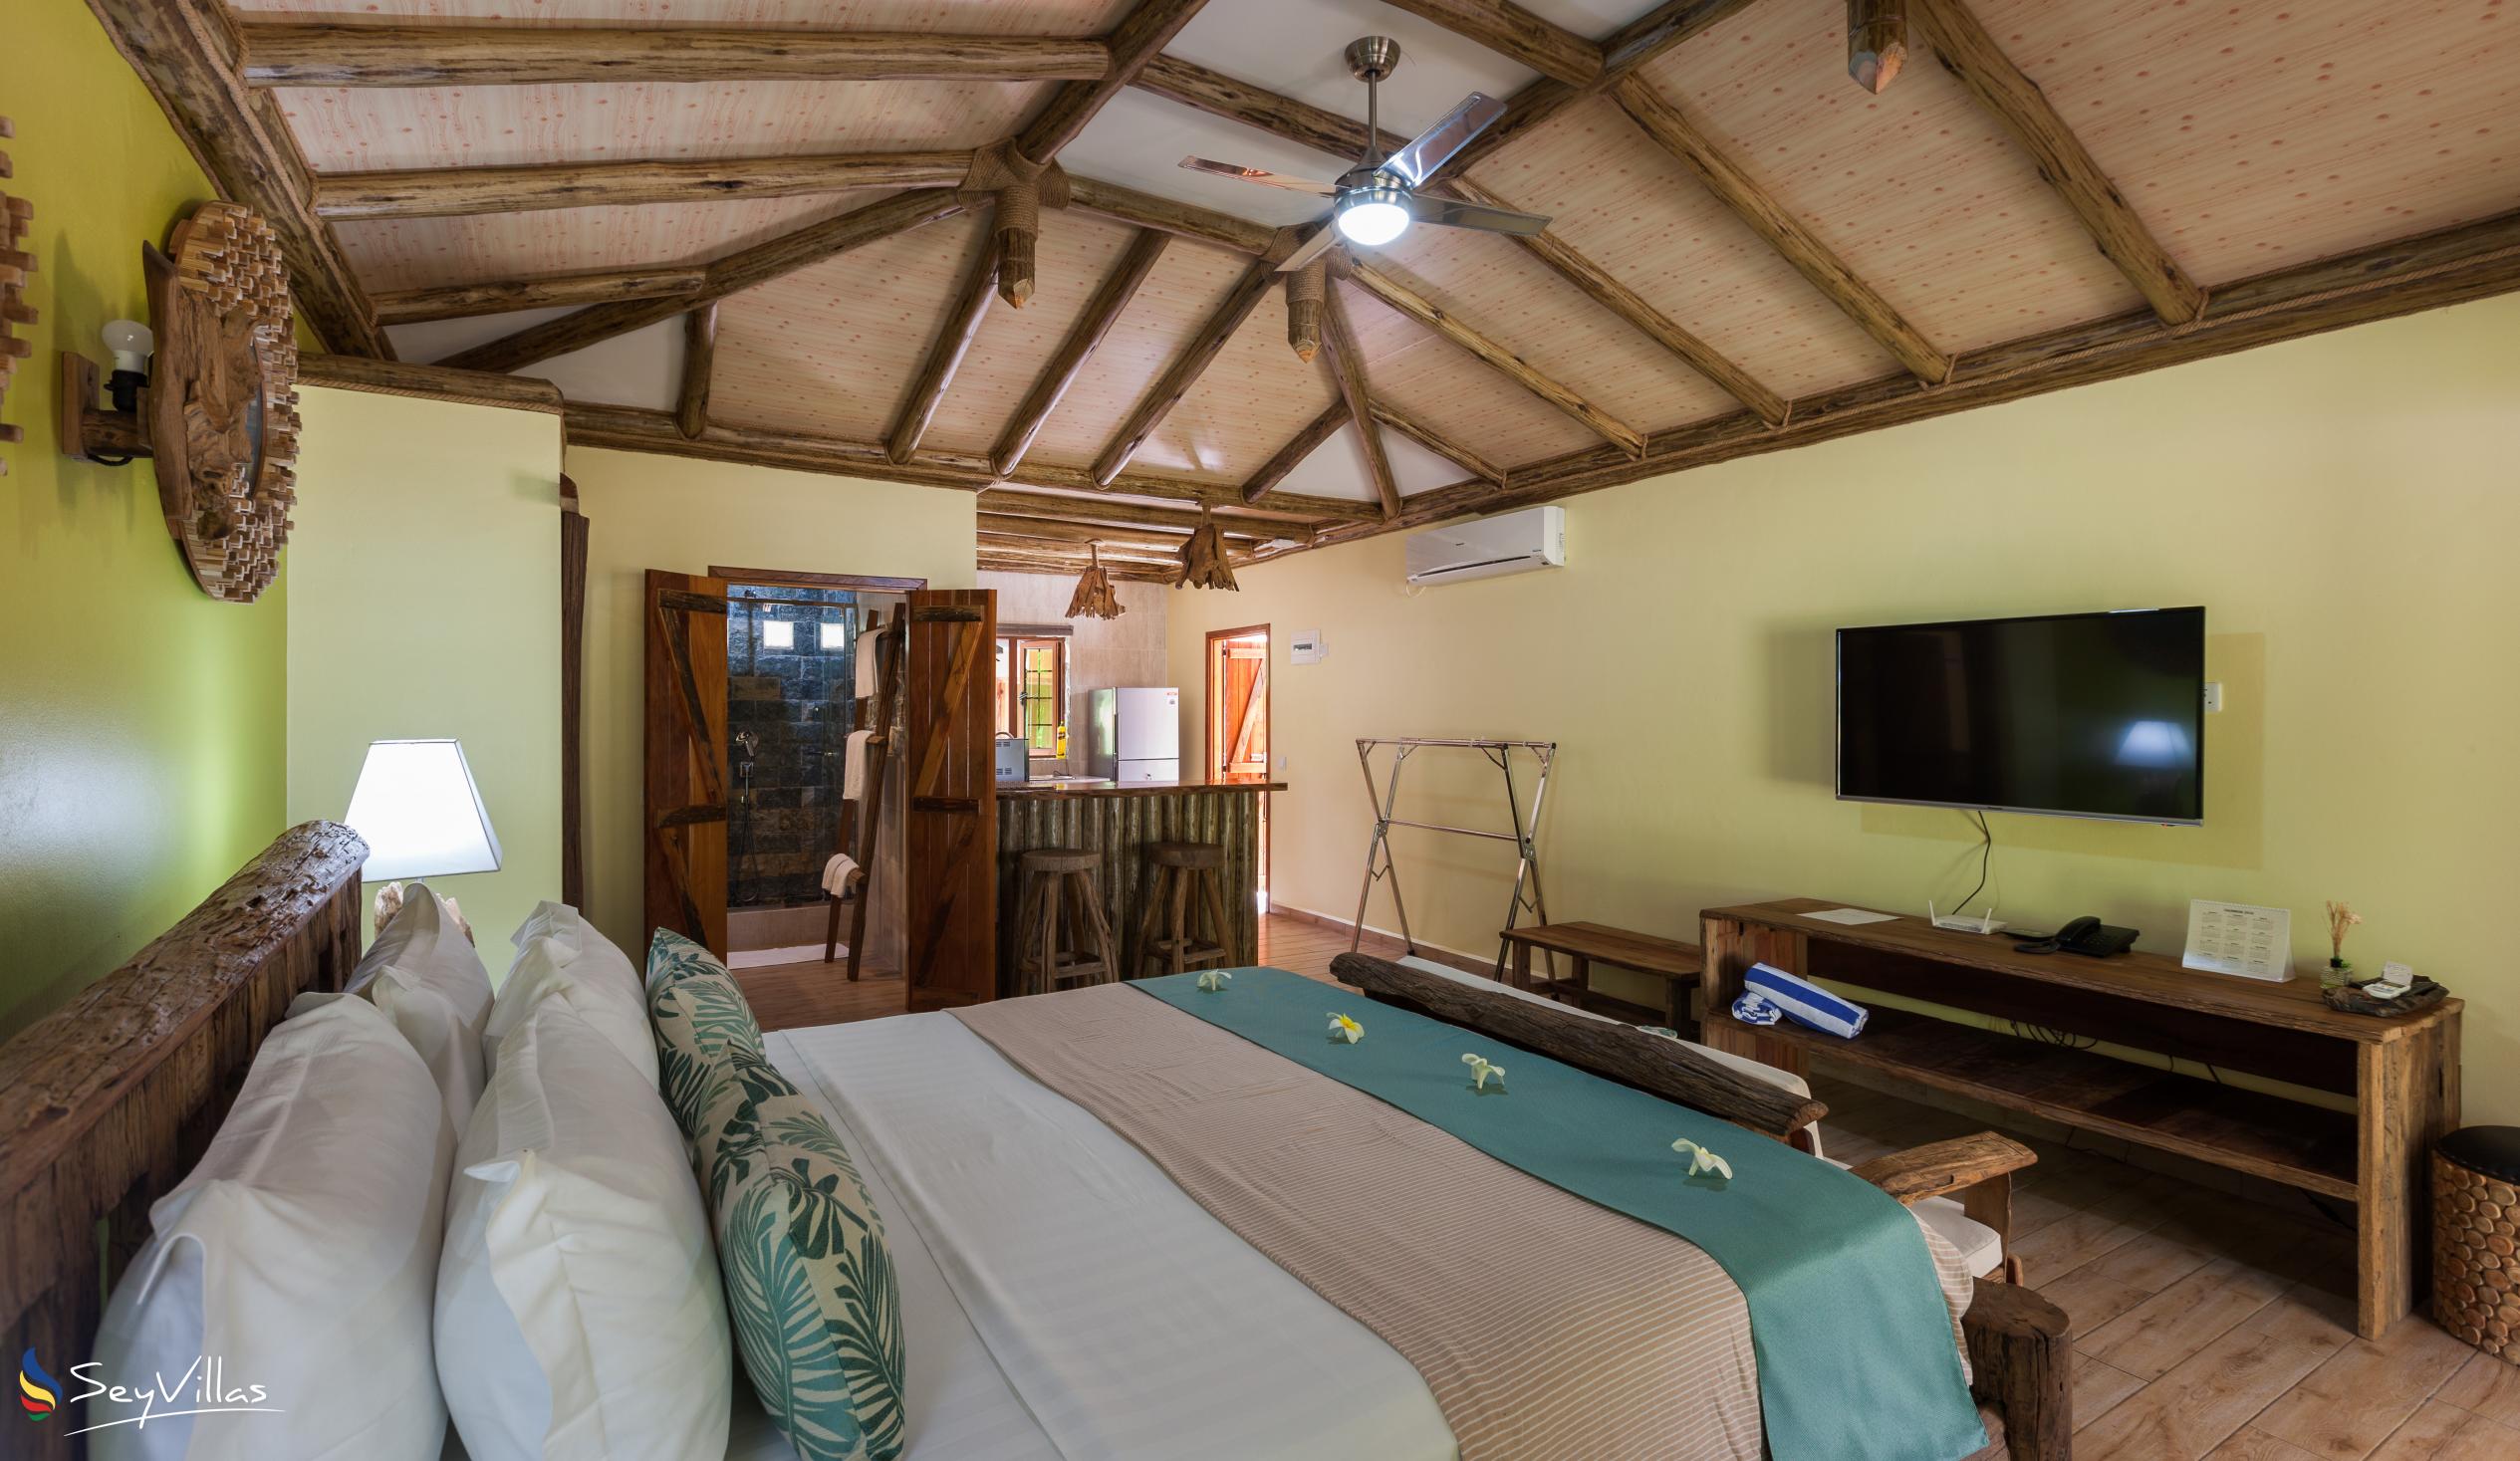 Foto 60: Anse Severe Beach Villa - Grande Villa Piano Terra - La Digue (Seychelles)